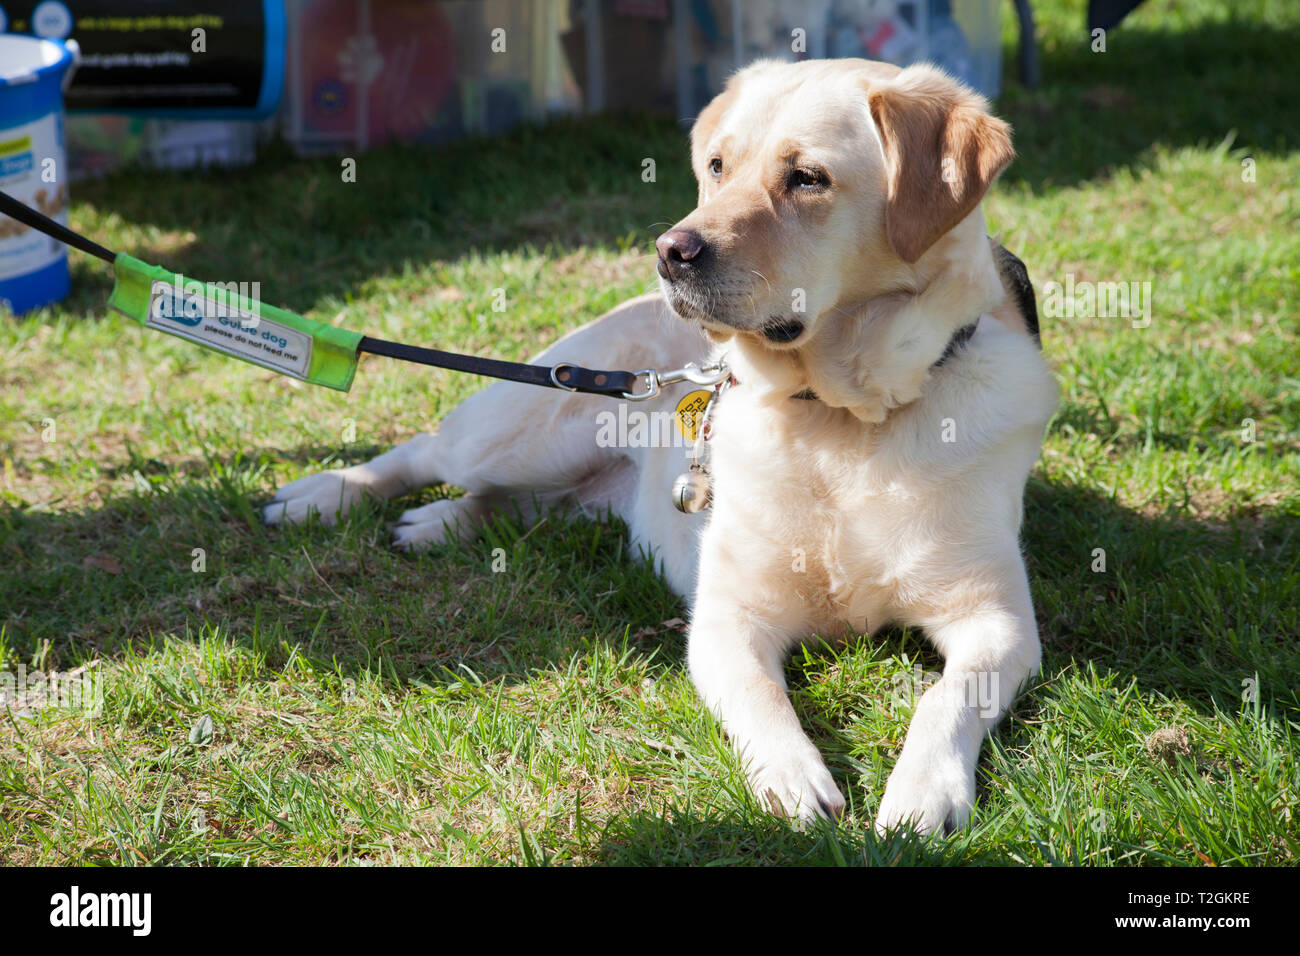 Golden Labrador come cane guida per ciechi a dog show in Helensburgh, Scozia Foto Stock